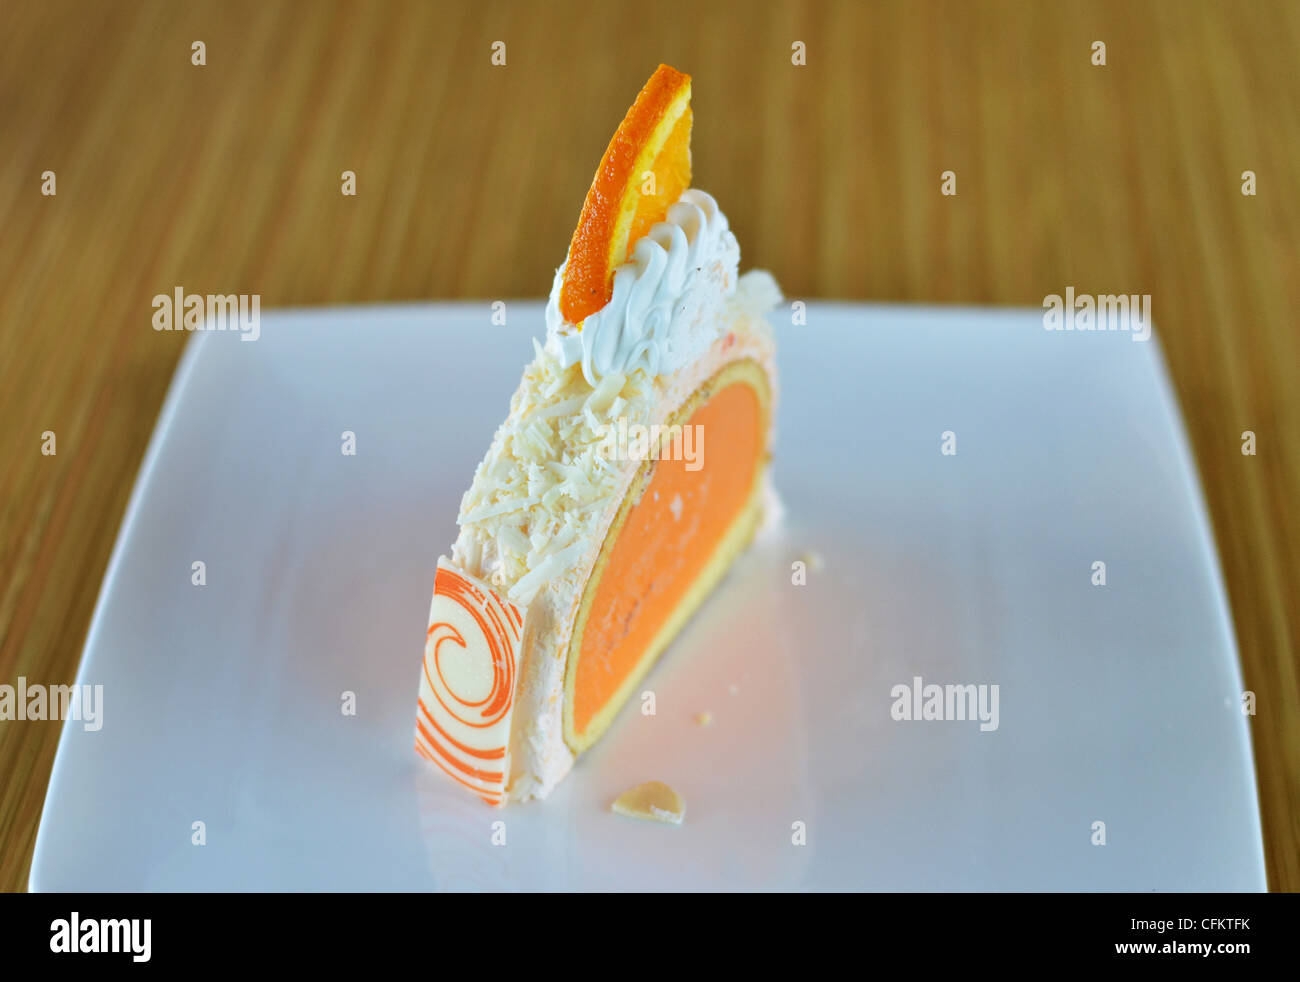 Orange torta gelato con panna montata Foto Stock